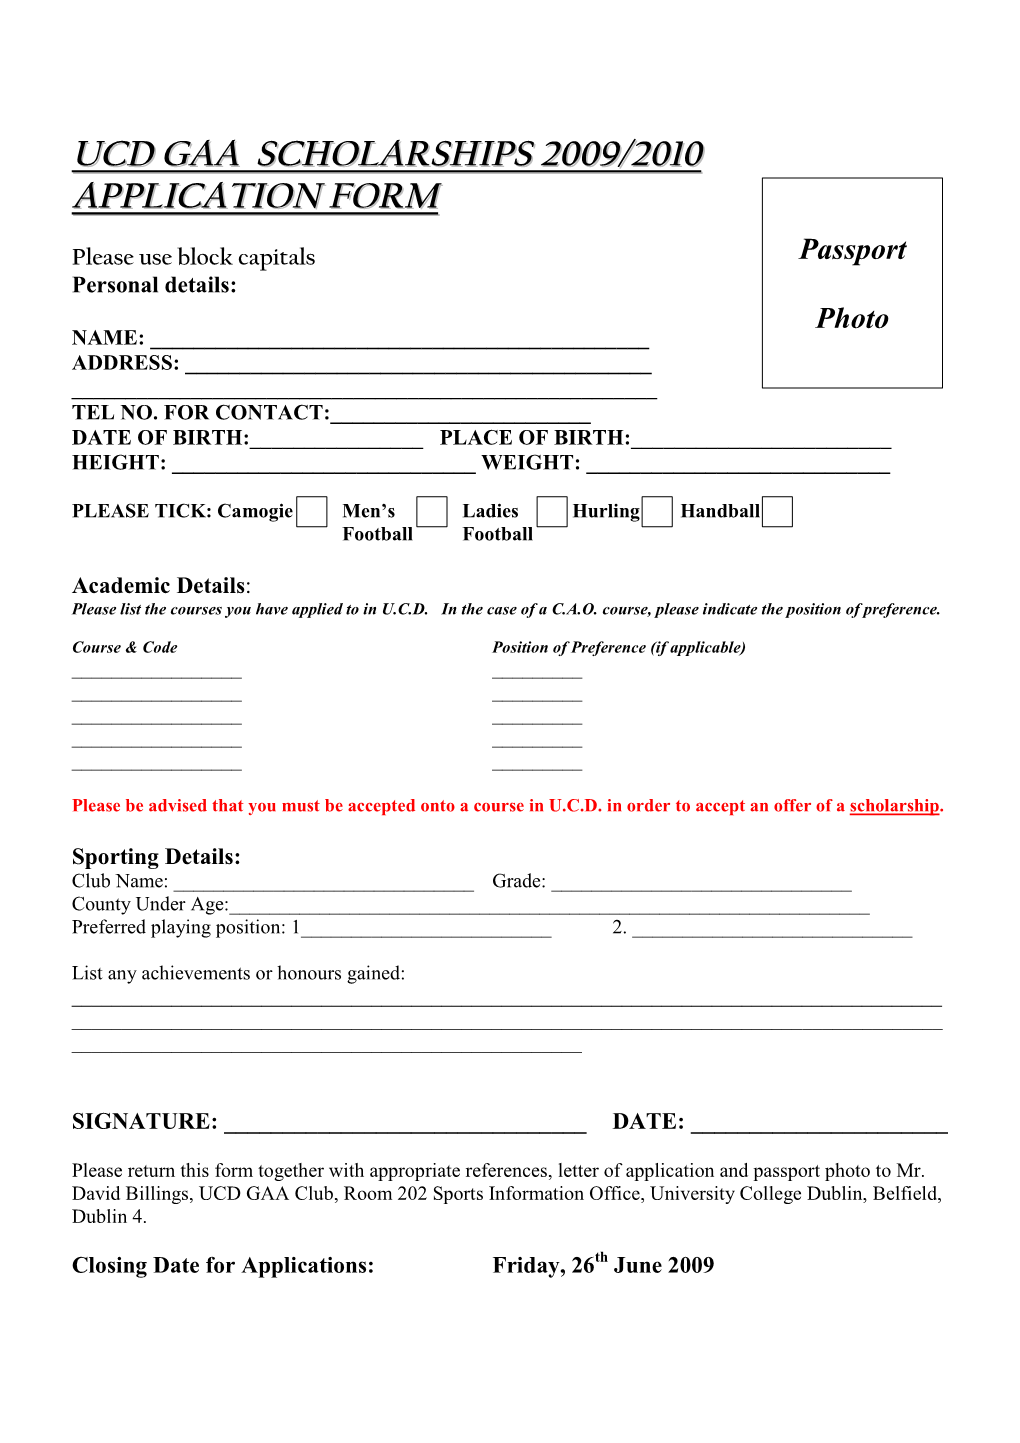 Ucd Gaa Scholarships 2009/2010 Application Form